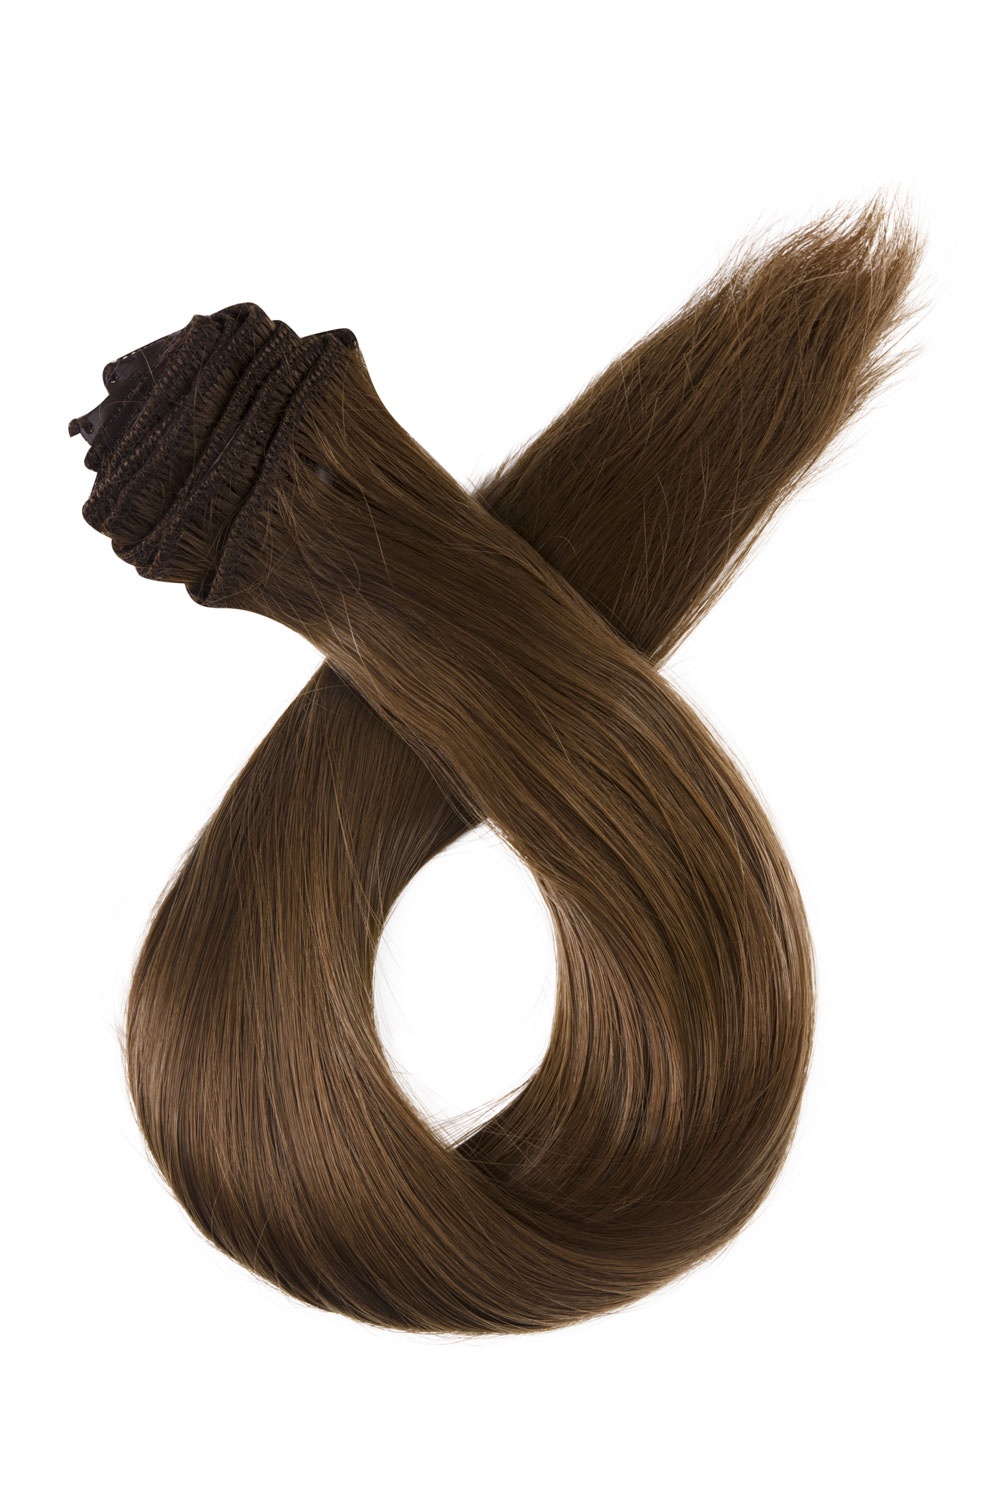 Svetlo gaštanovo hnedé clip-in vlasy, 60cm, 115g, farba 10